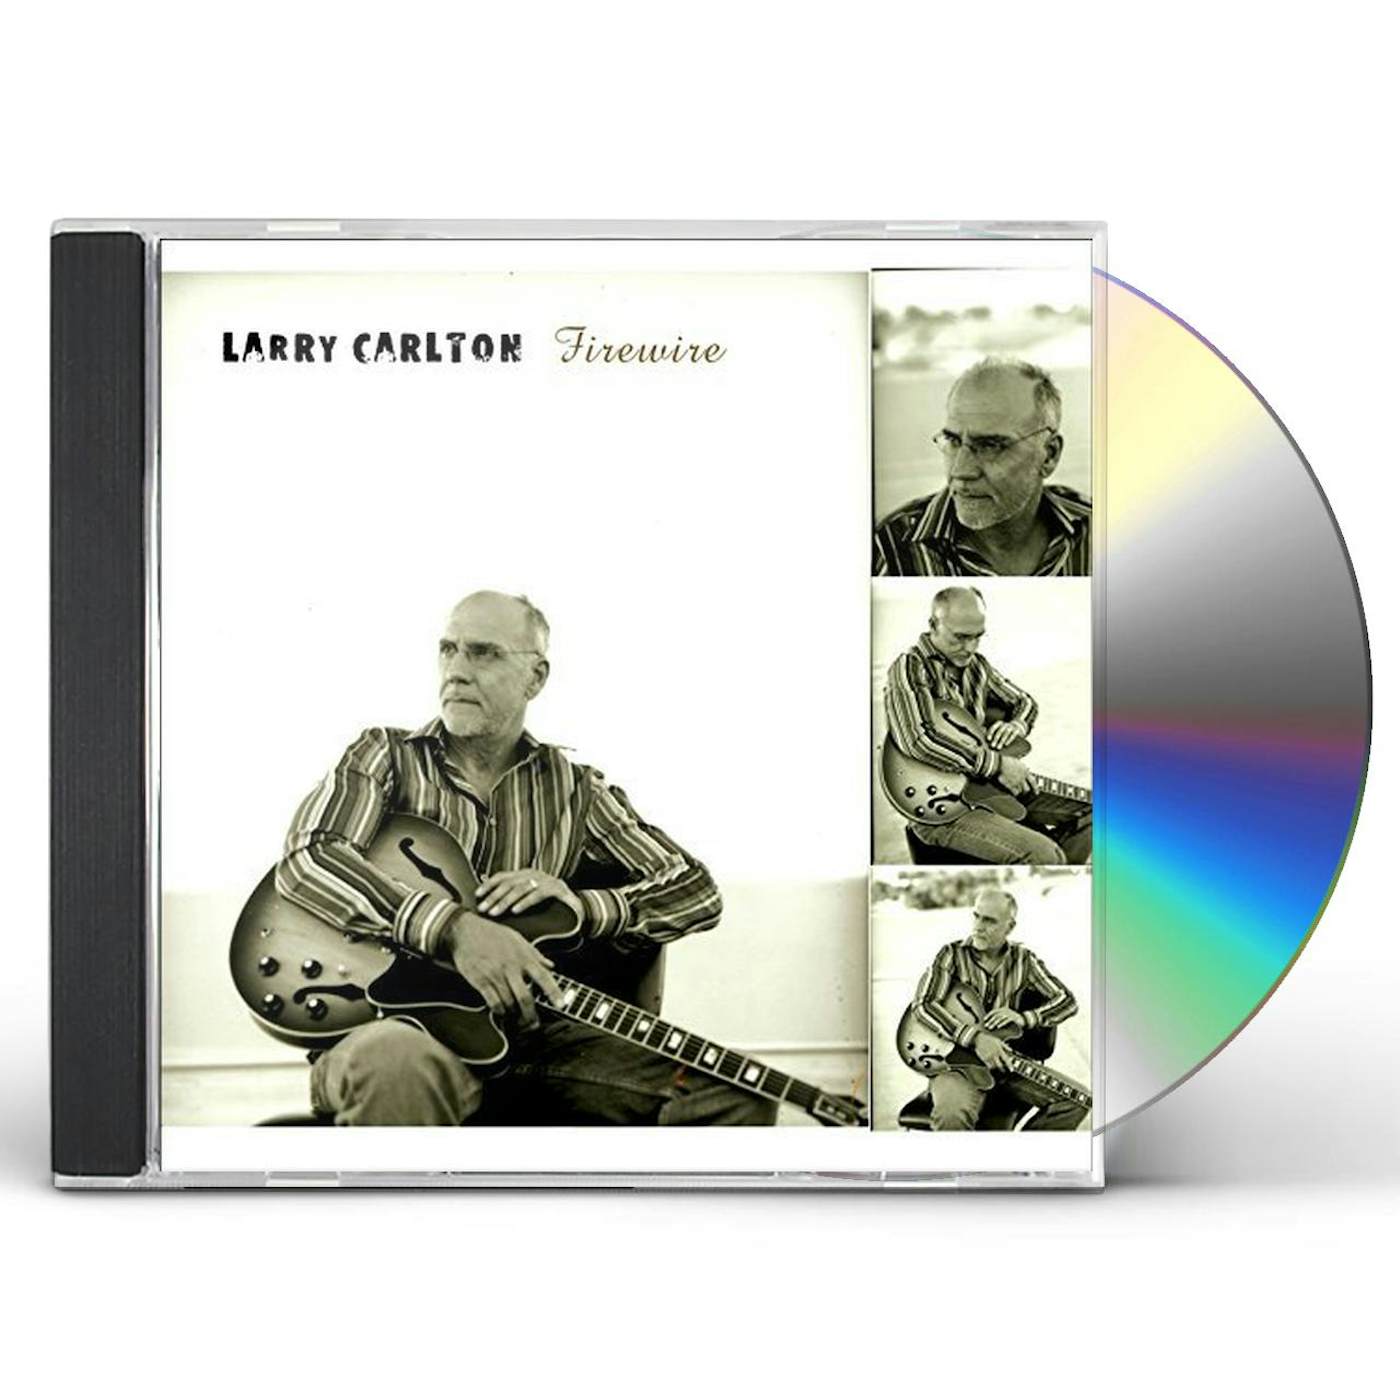 Larry Carlton FIREWIRE CD